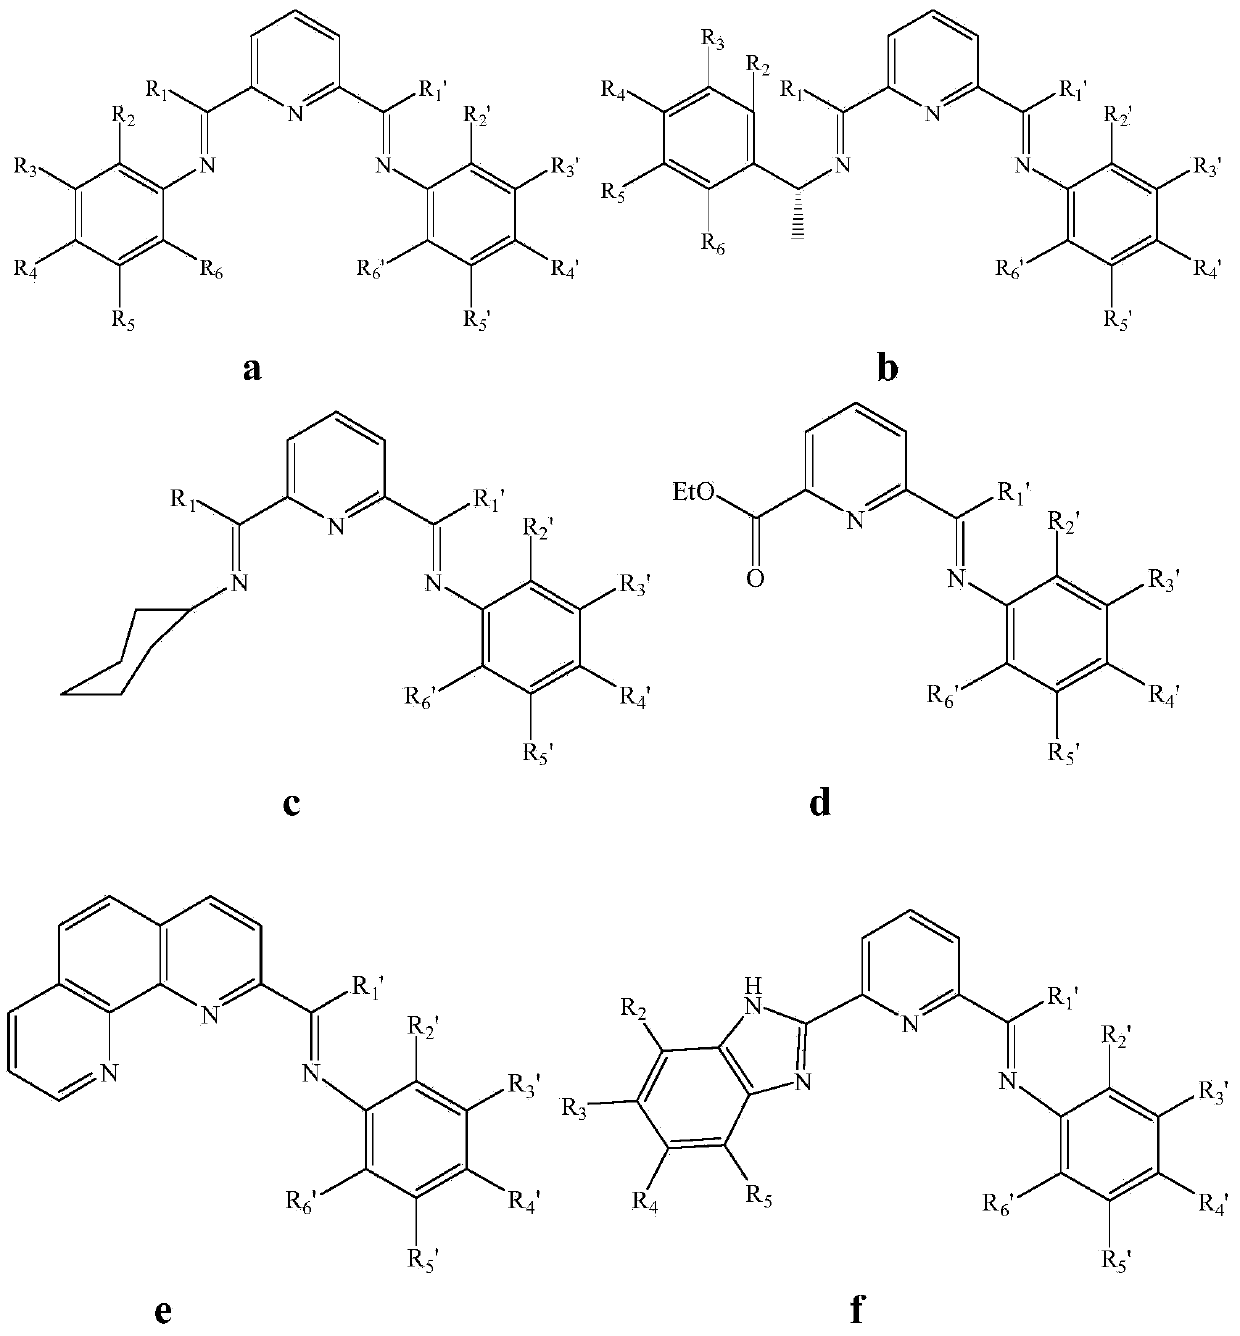 Method for reducing content of polyethylene wax during ethylene oligomerization reaction